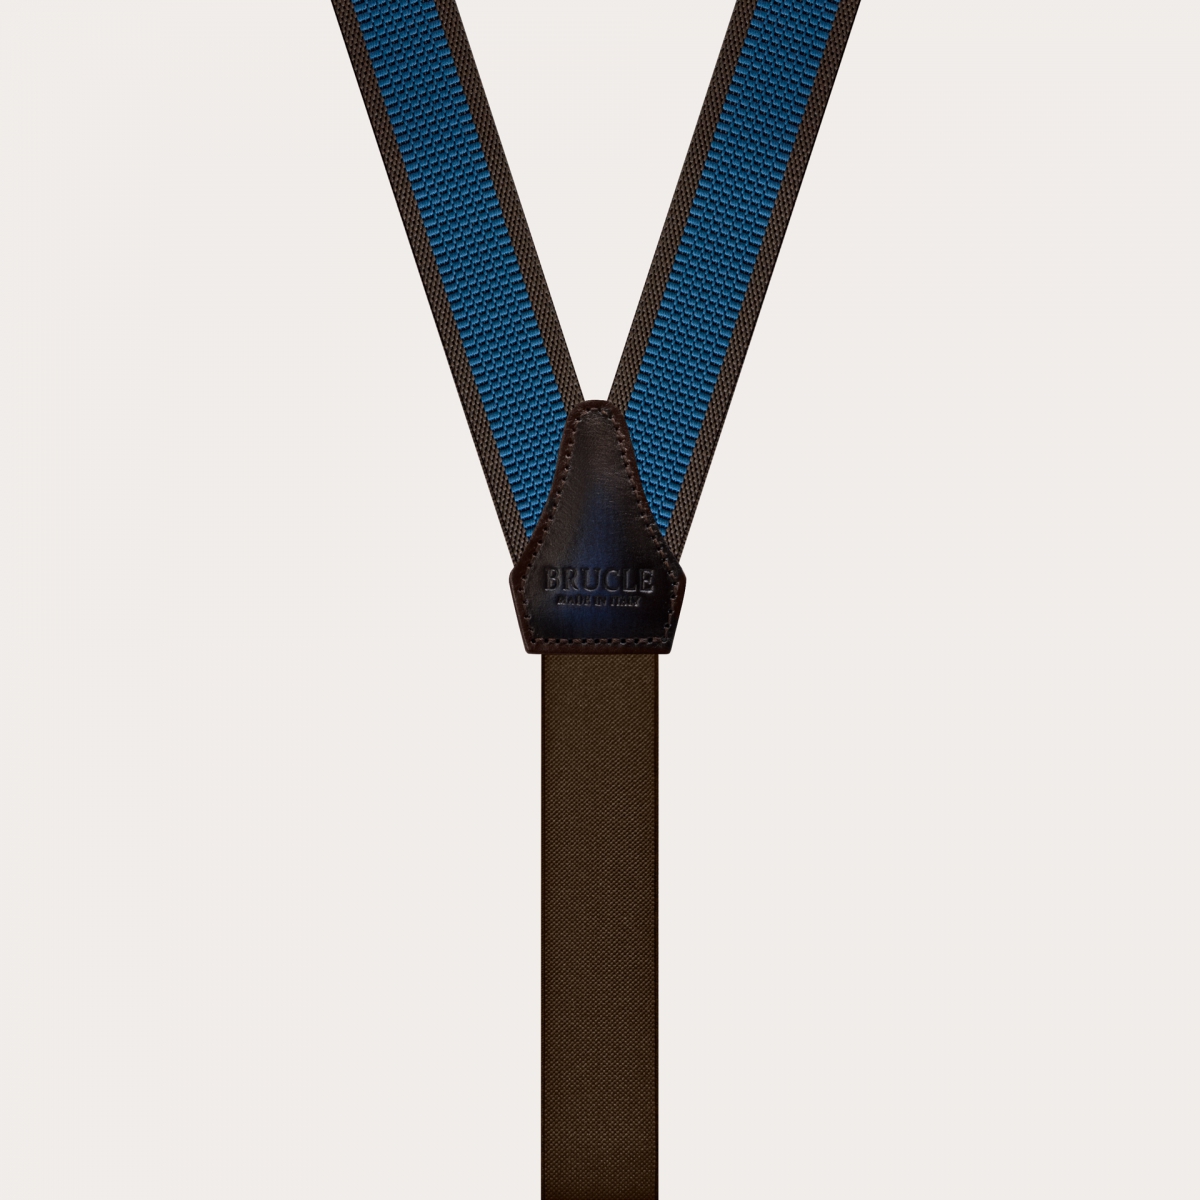 BRUCLE Thin nickel free unisex suspenders, blue and brown